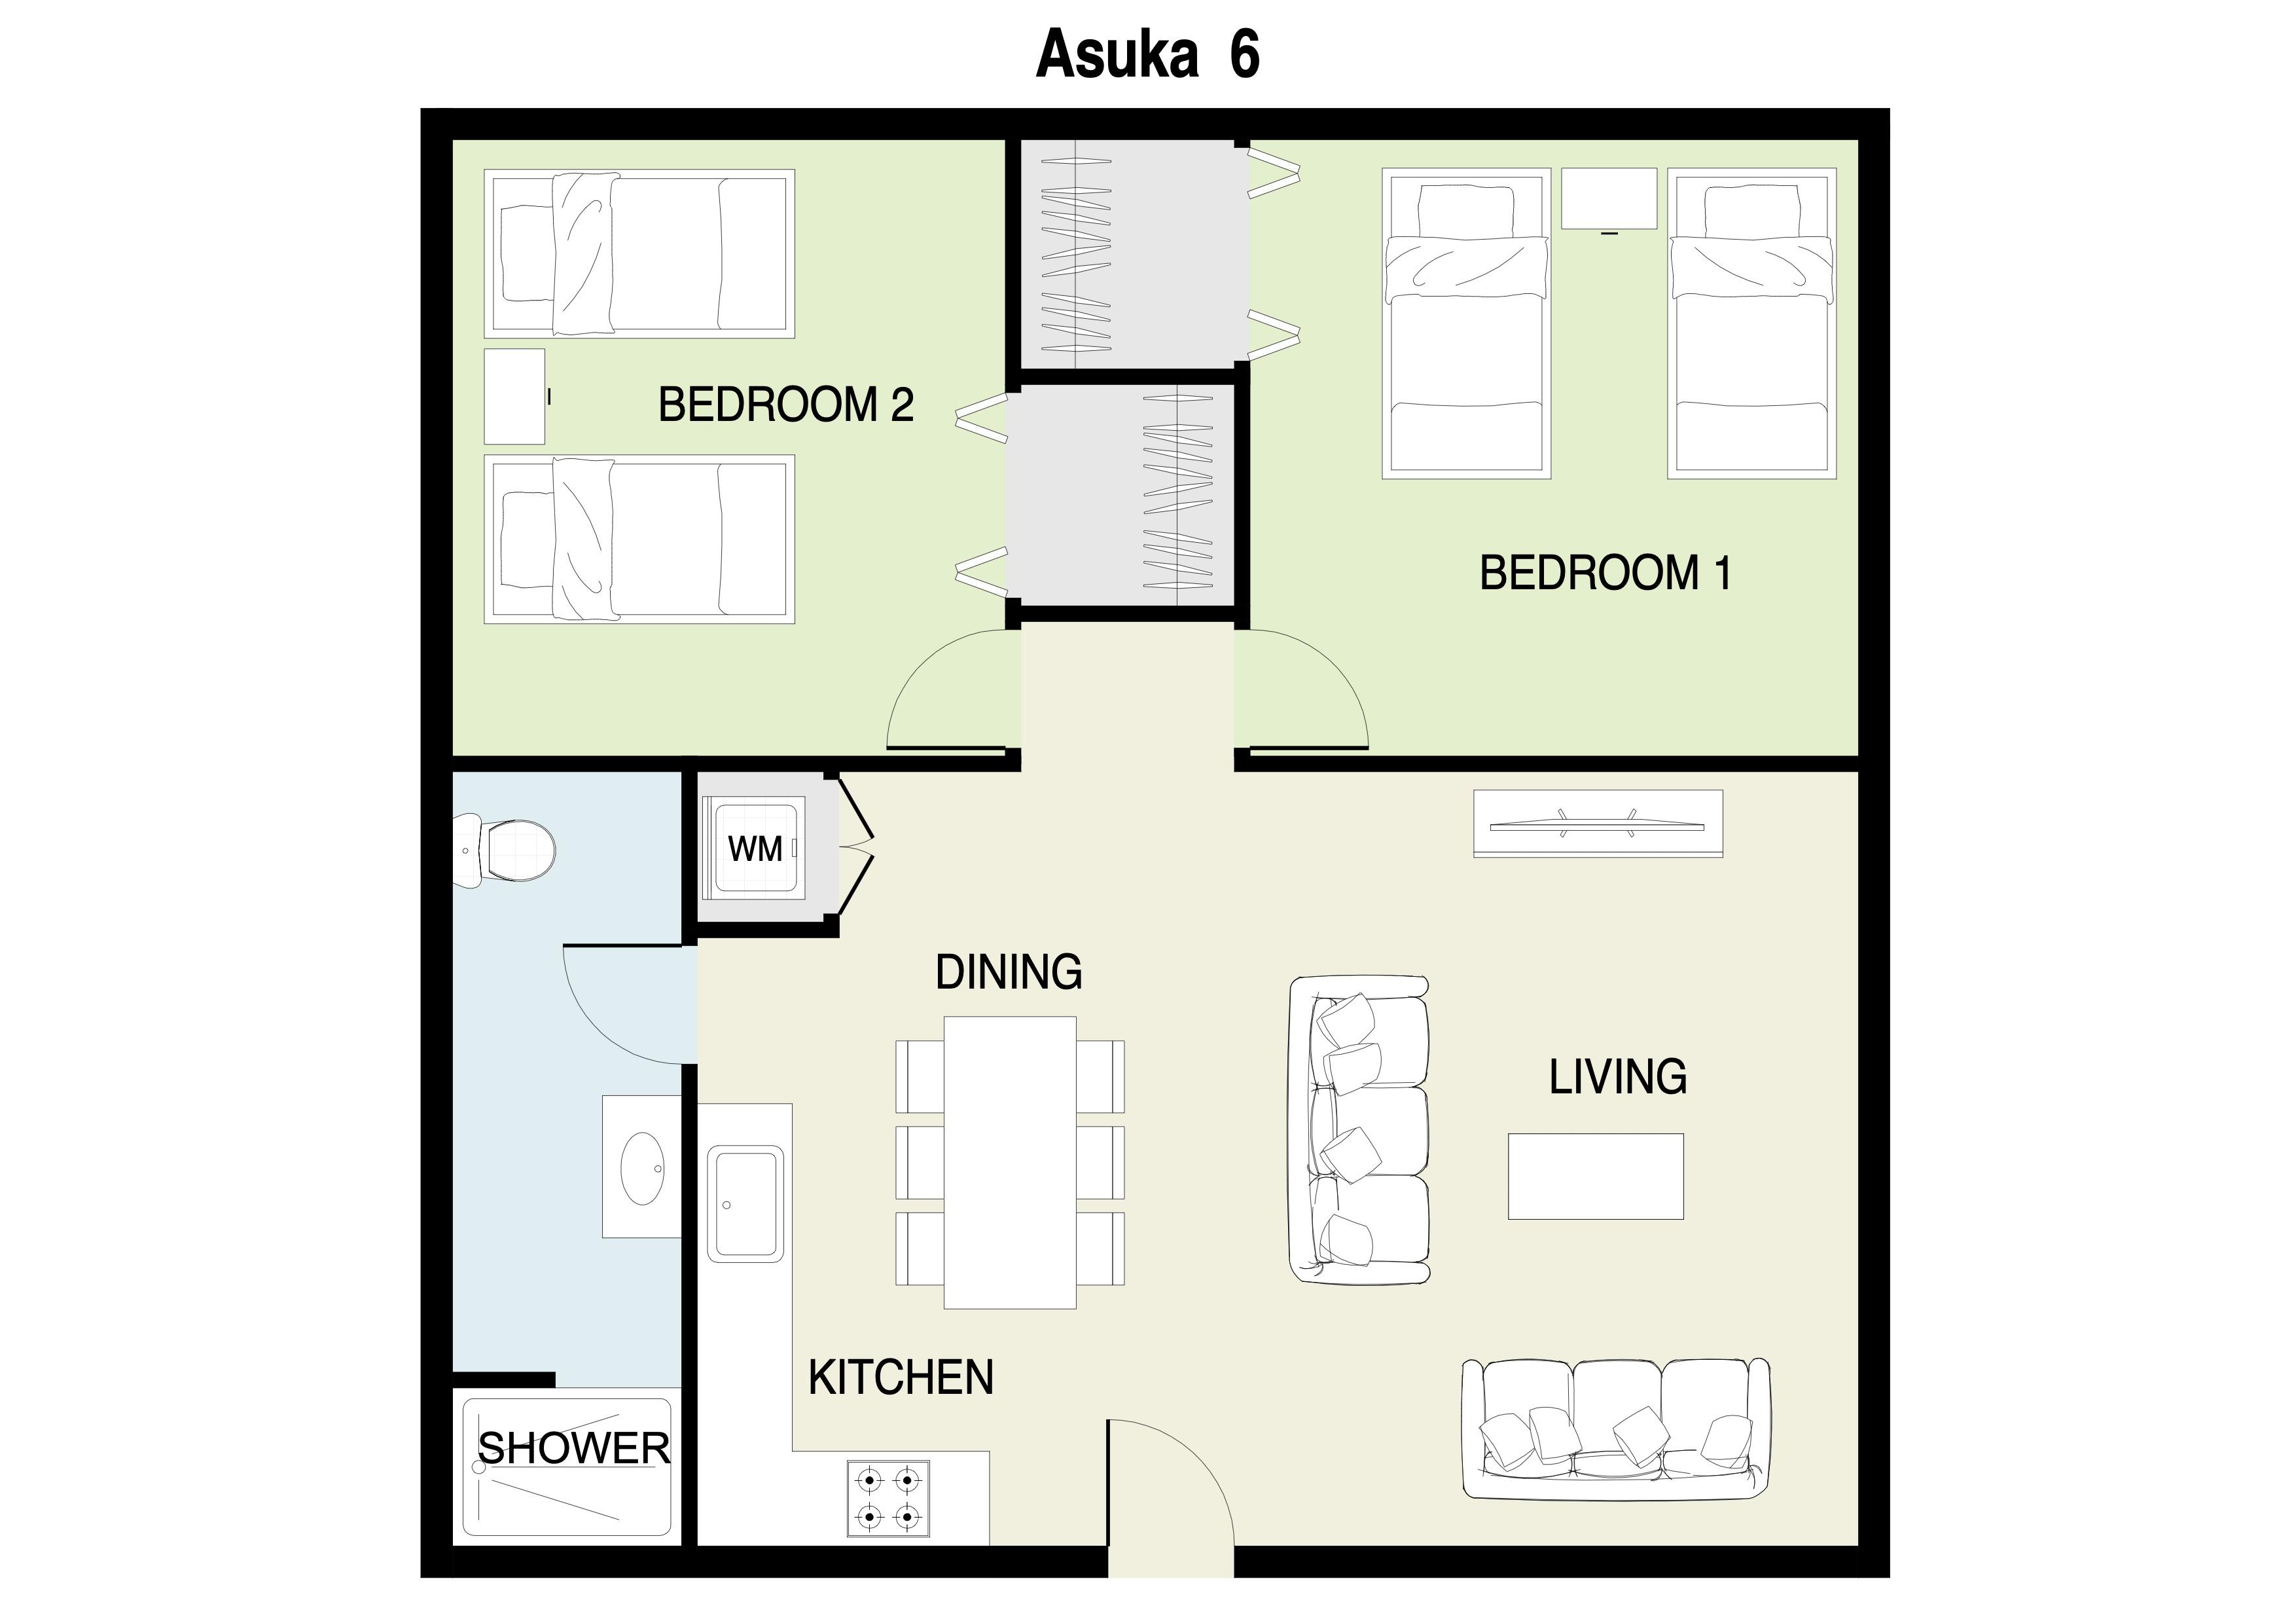 Asuka 6 Floor Plan